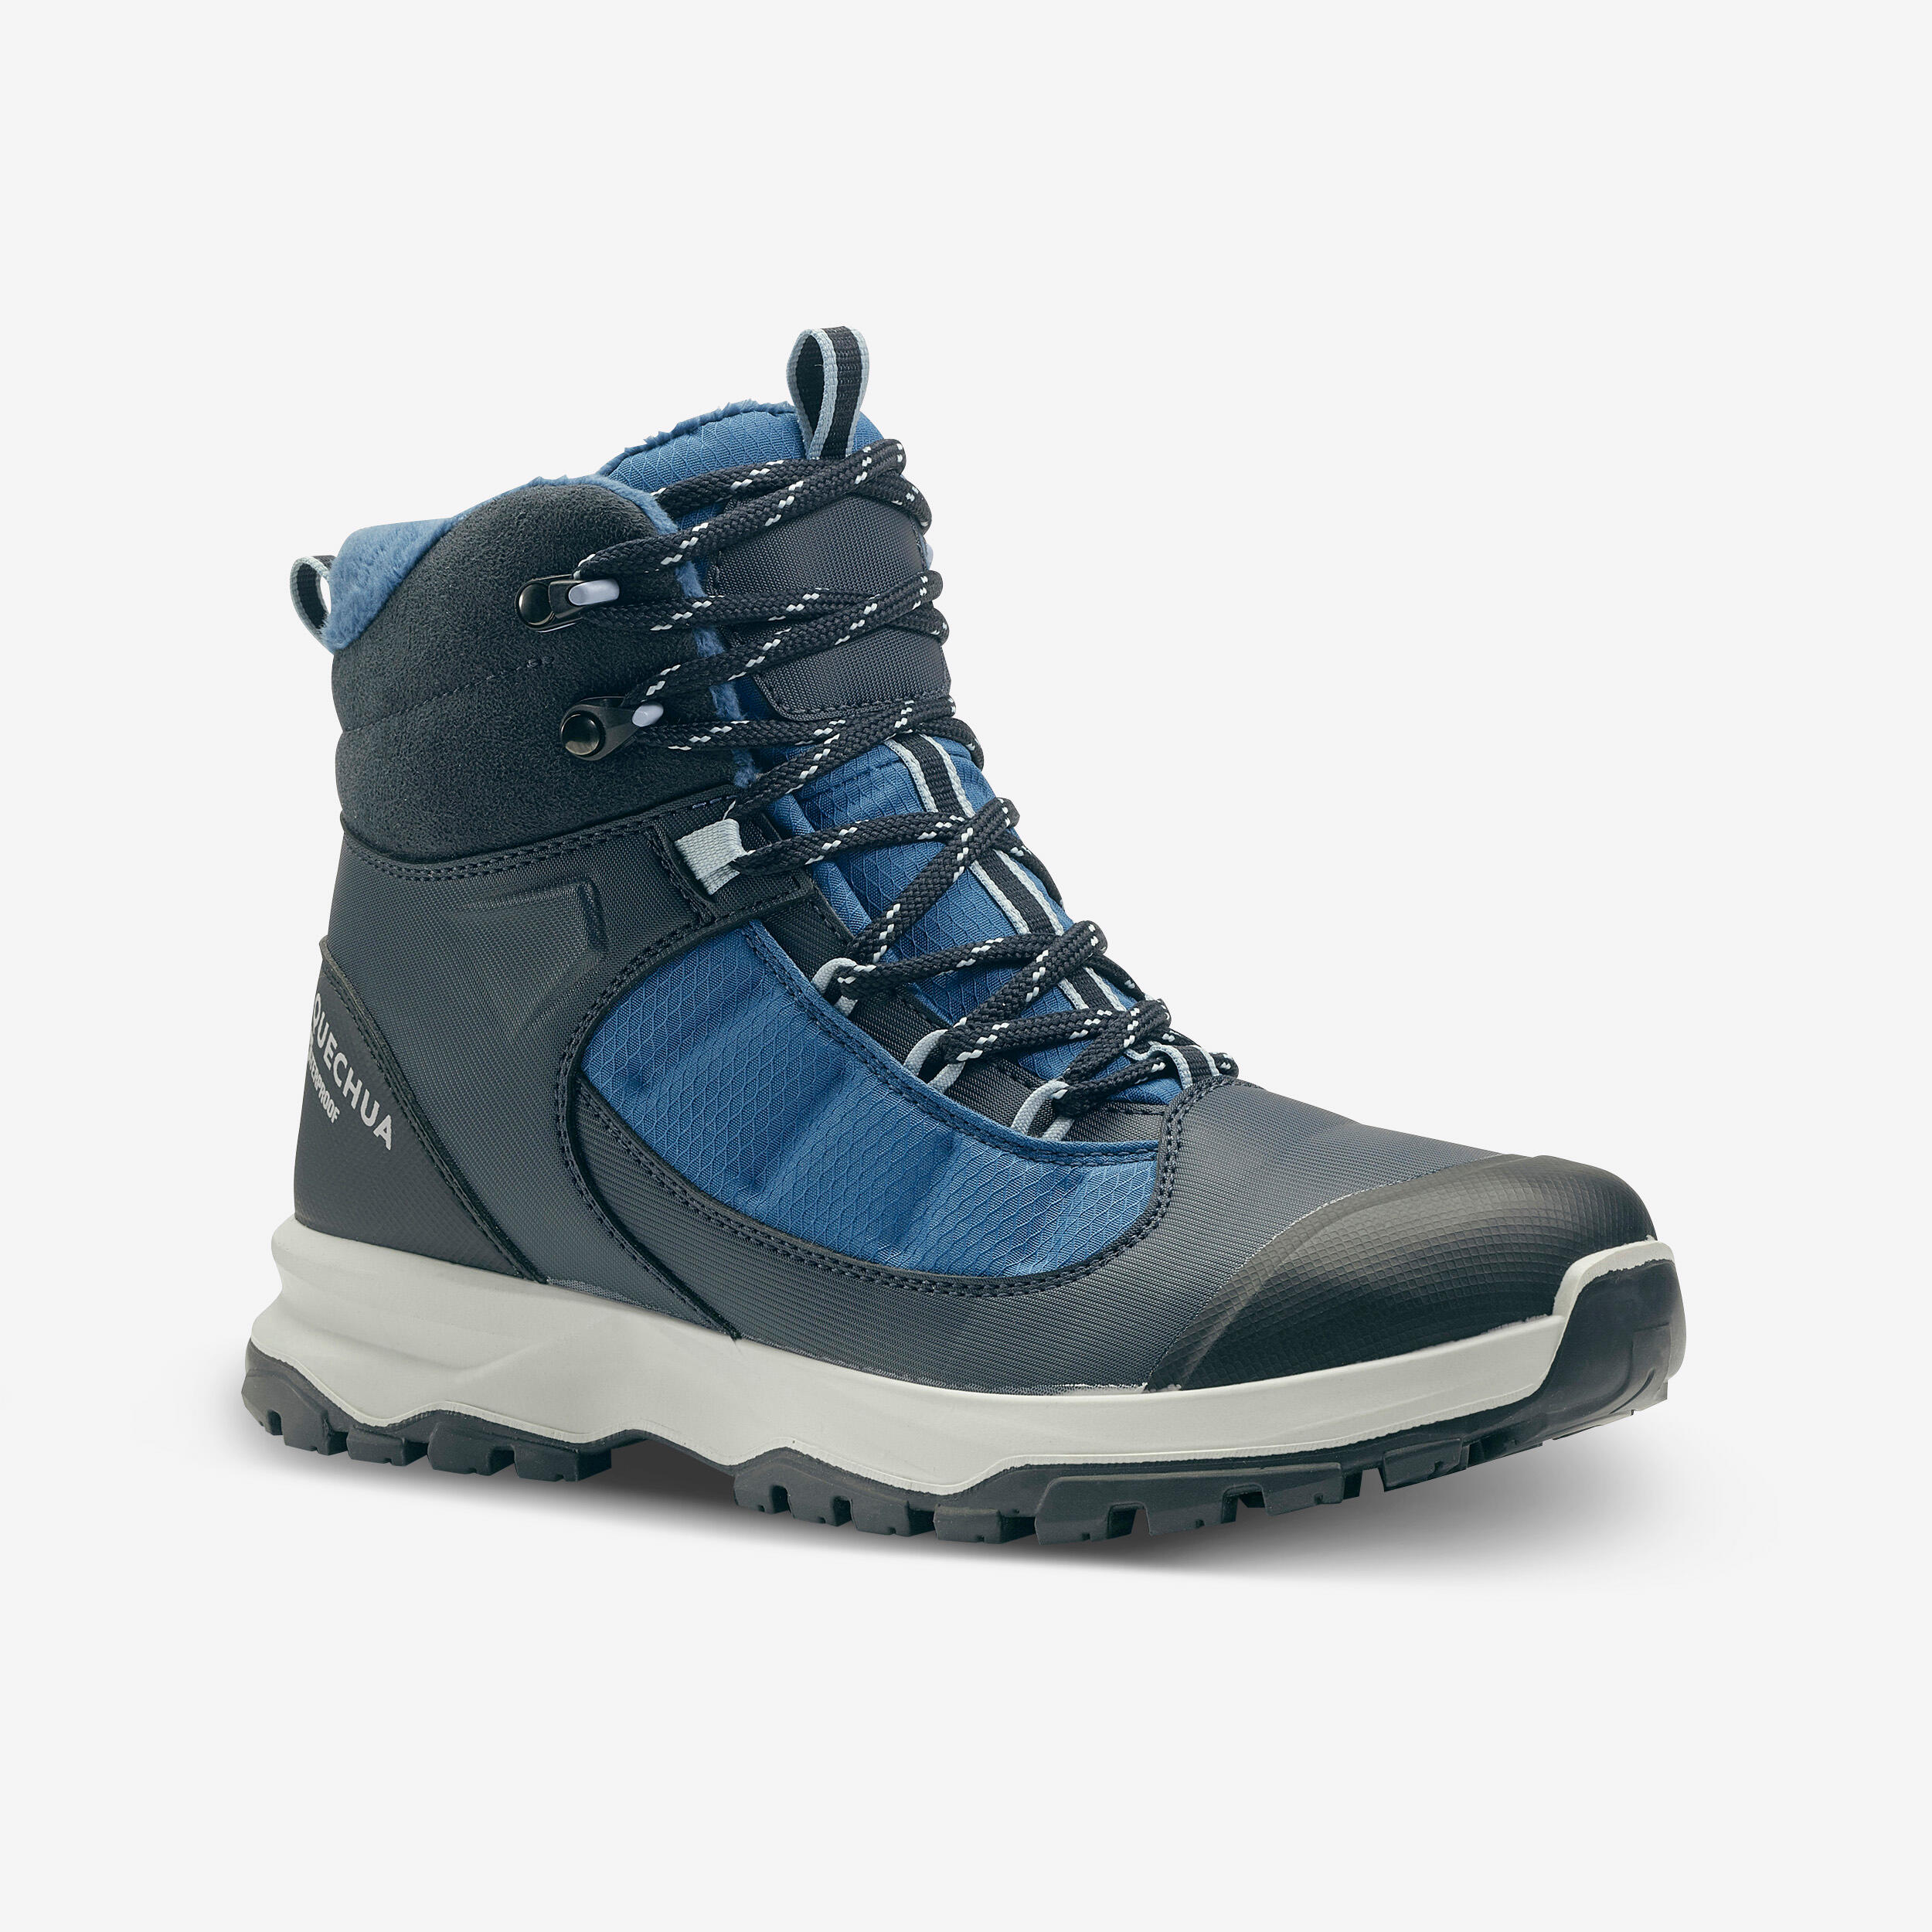 Women’s warm and waterproof hiking shoes - SH500 Mountain MID 1/7